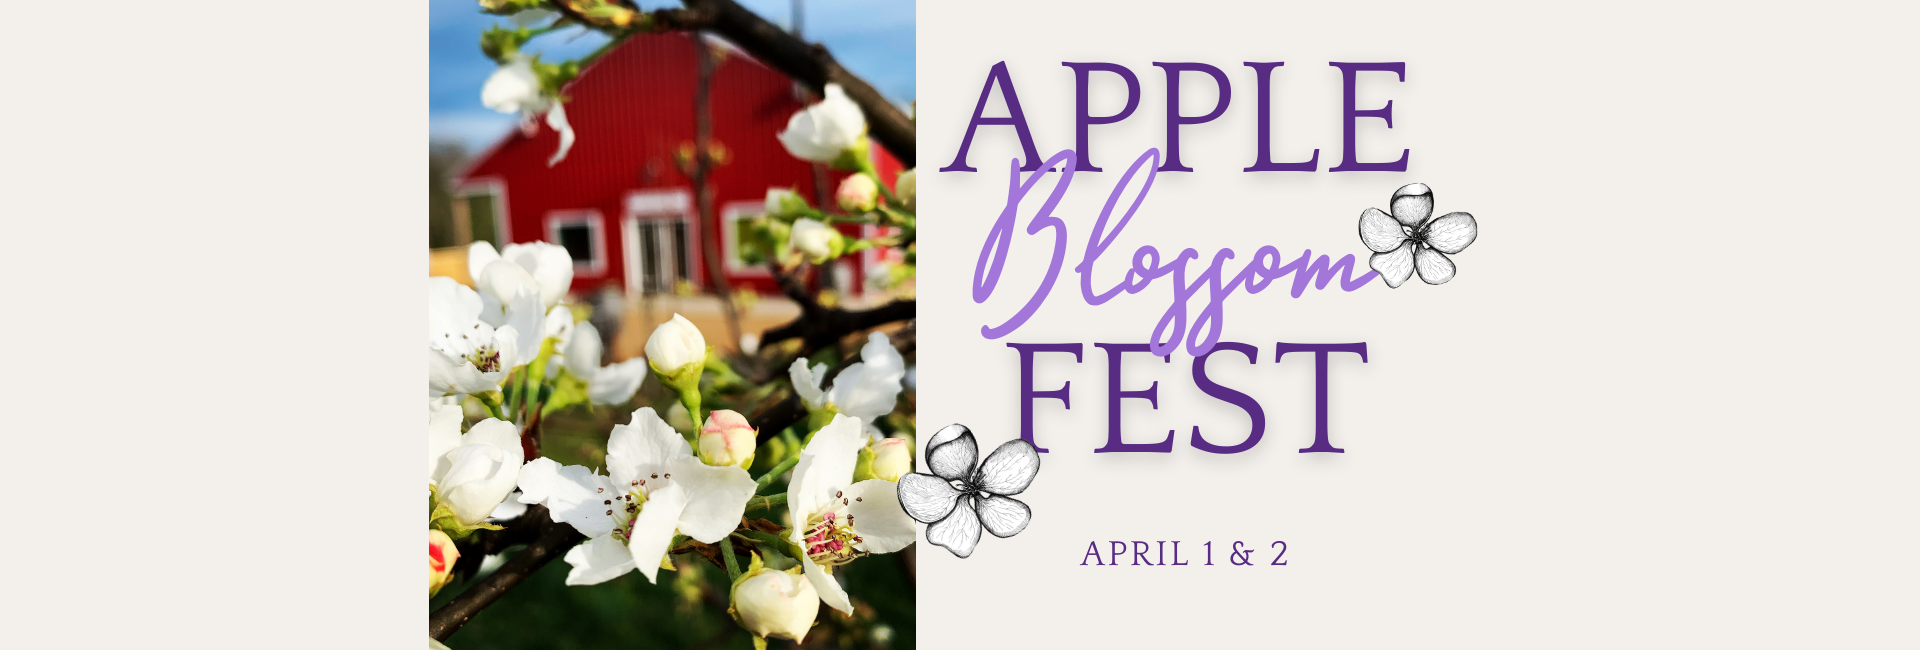 Apple Blossom Fest (1920 × 650 px)